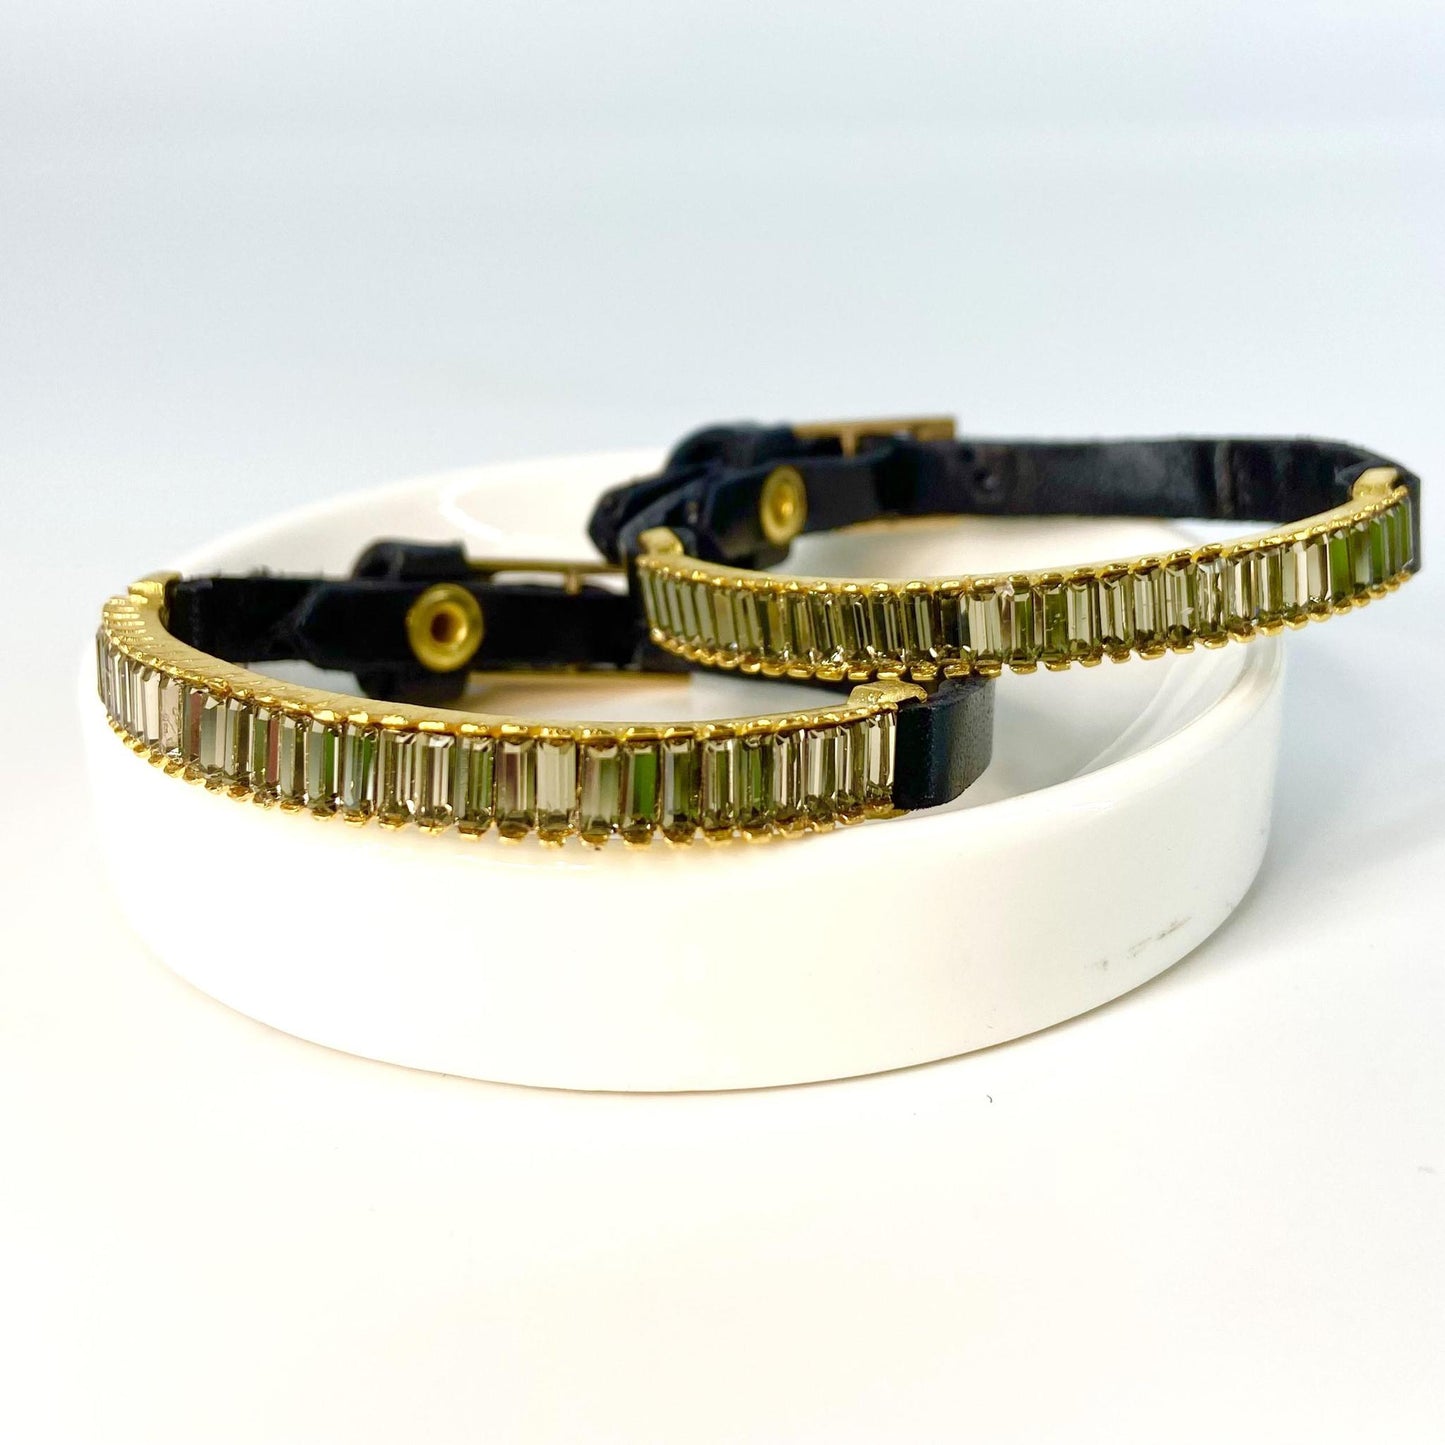 Bracelet - Leather/Black Diamond Crystals in 14kt Gold On Brass